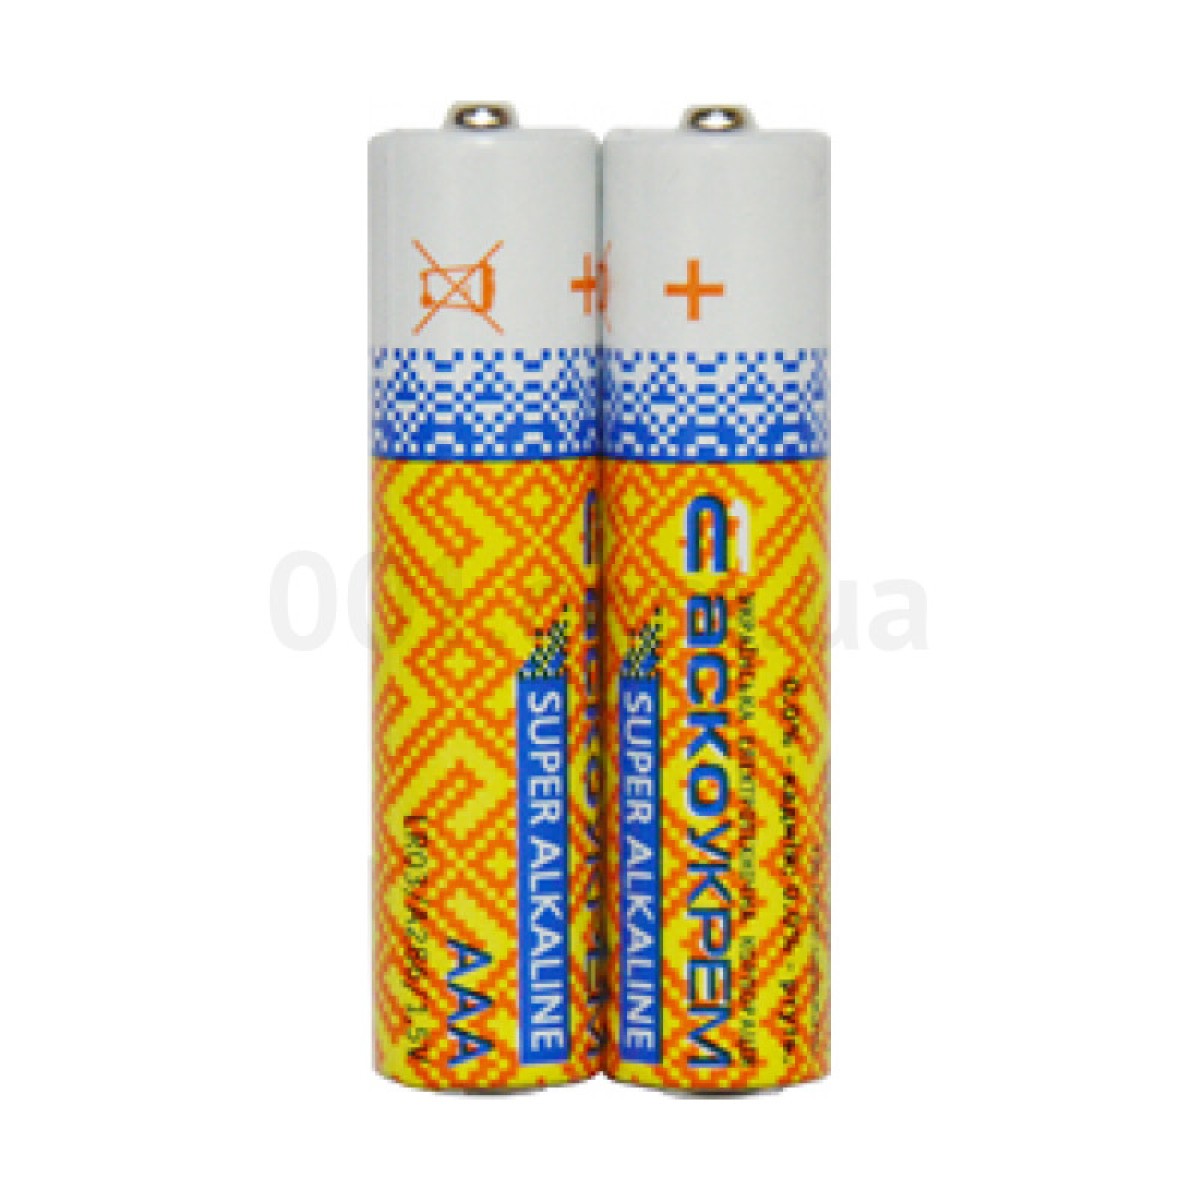 Батарейка лужна AАА.LR03.SP2, типорозмір AAA упаковка shrink 2 шт., АСКО-УКРЕМ 98_98.jpg